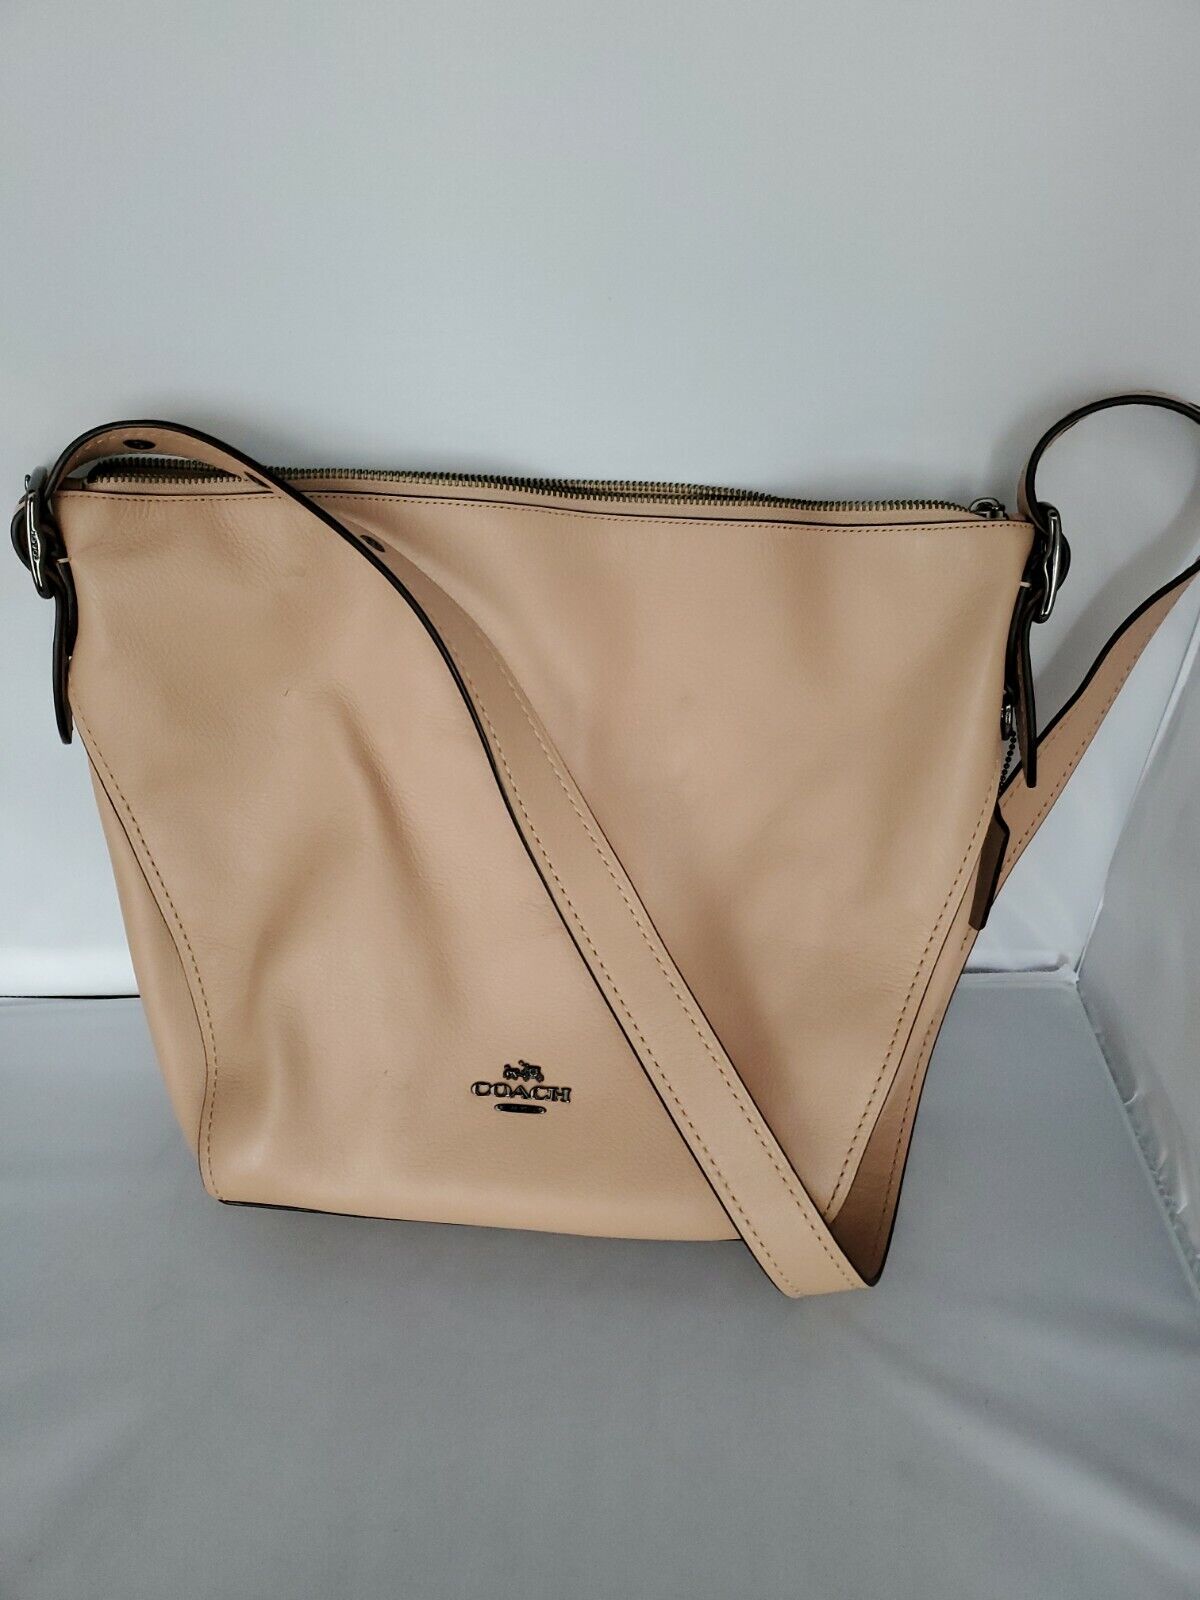 Coach Tan Leather Handbag - image 4